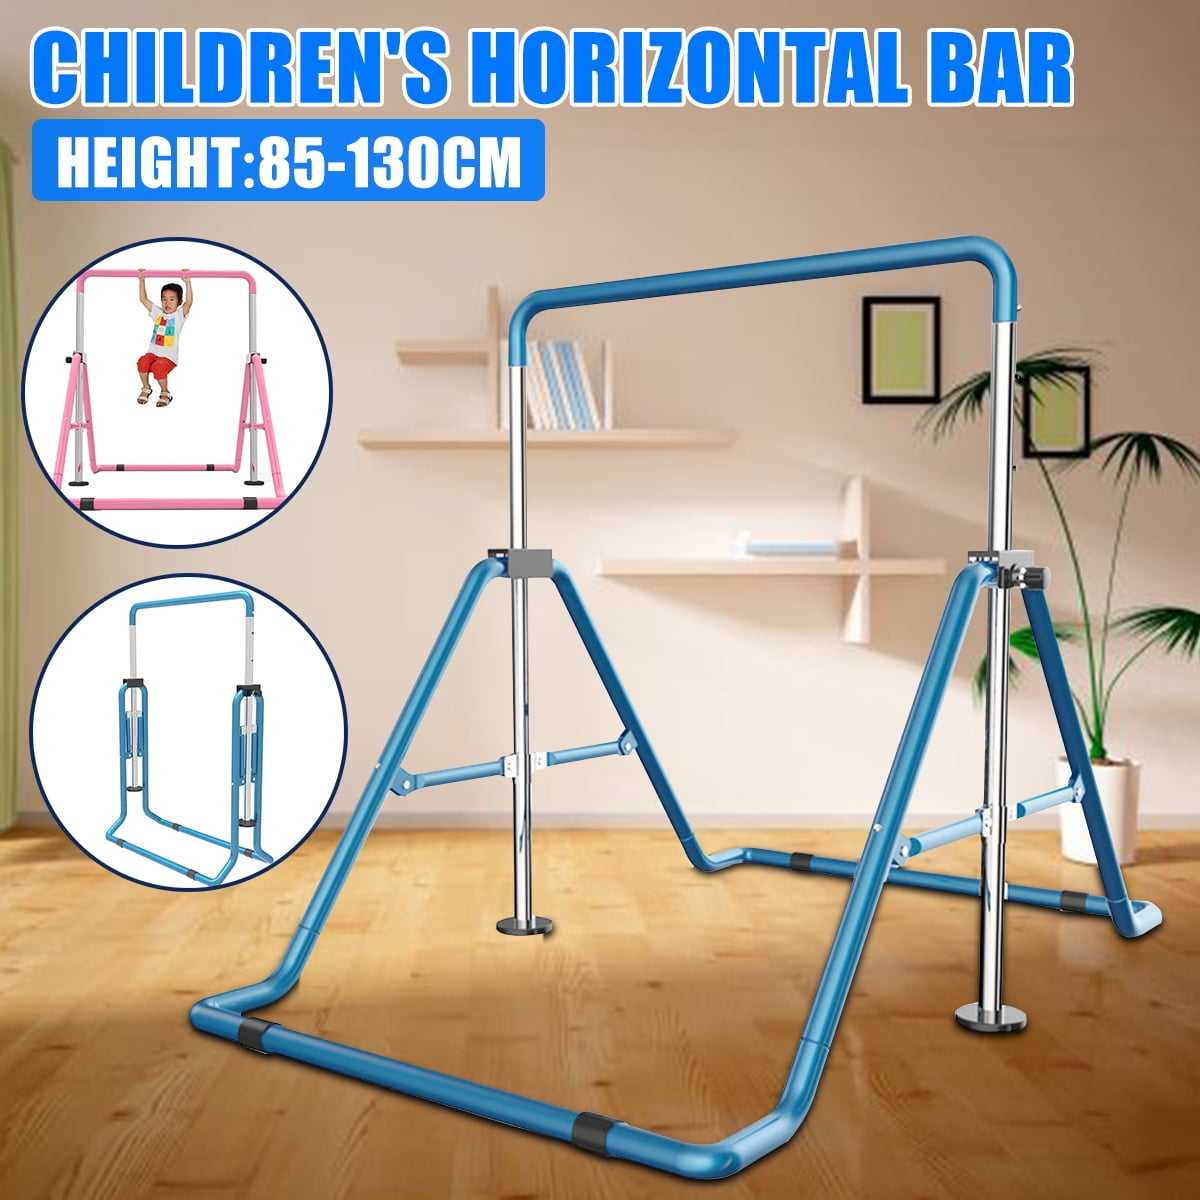 Macticy Gymnastics Bar Adjust Horizontal Bar Foldable Storage Stable Kip Bar Multifunction Expandable Junior Training Bar for Kids Home Training 